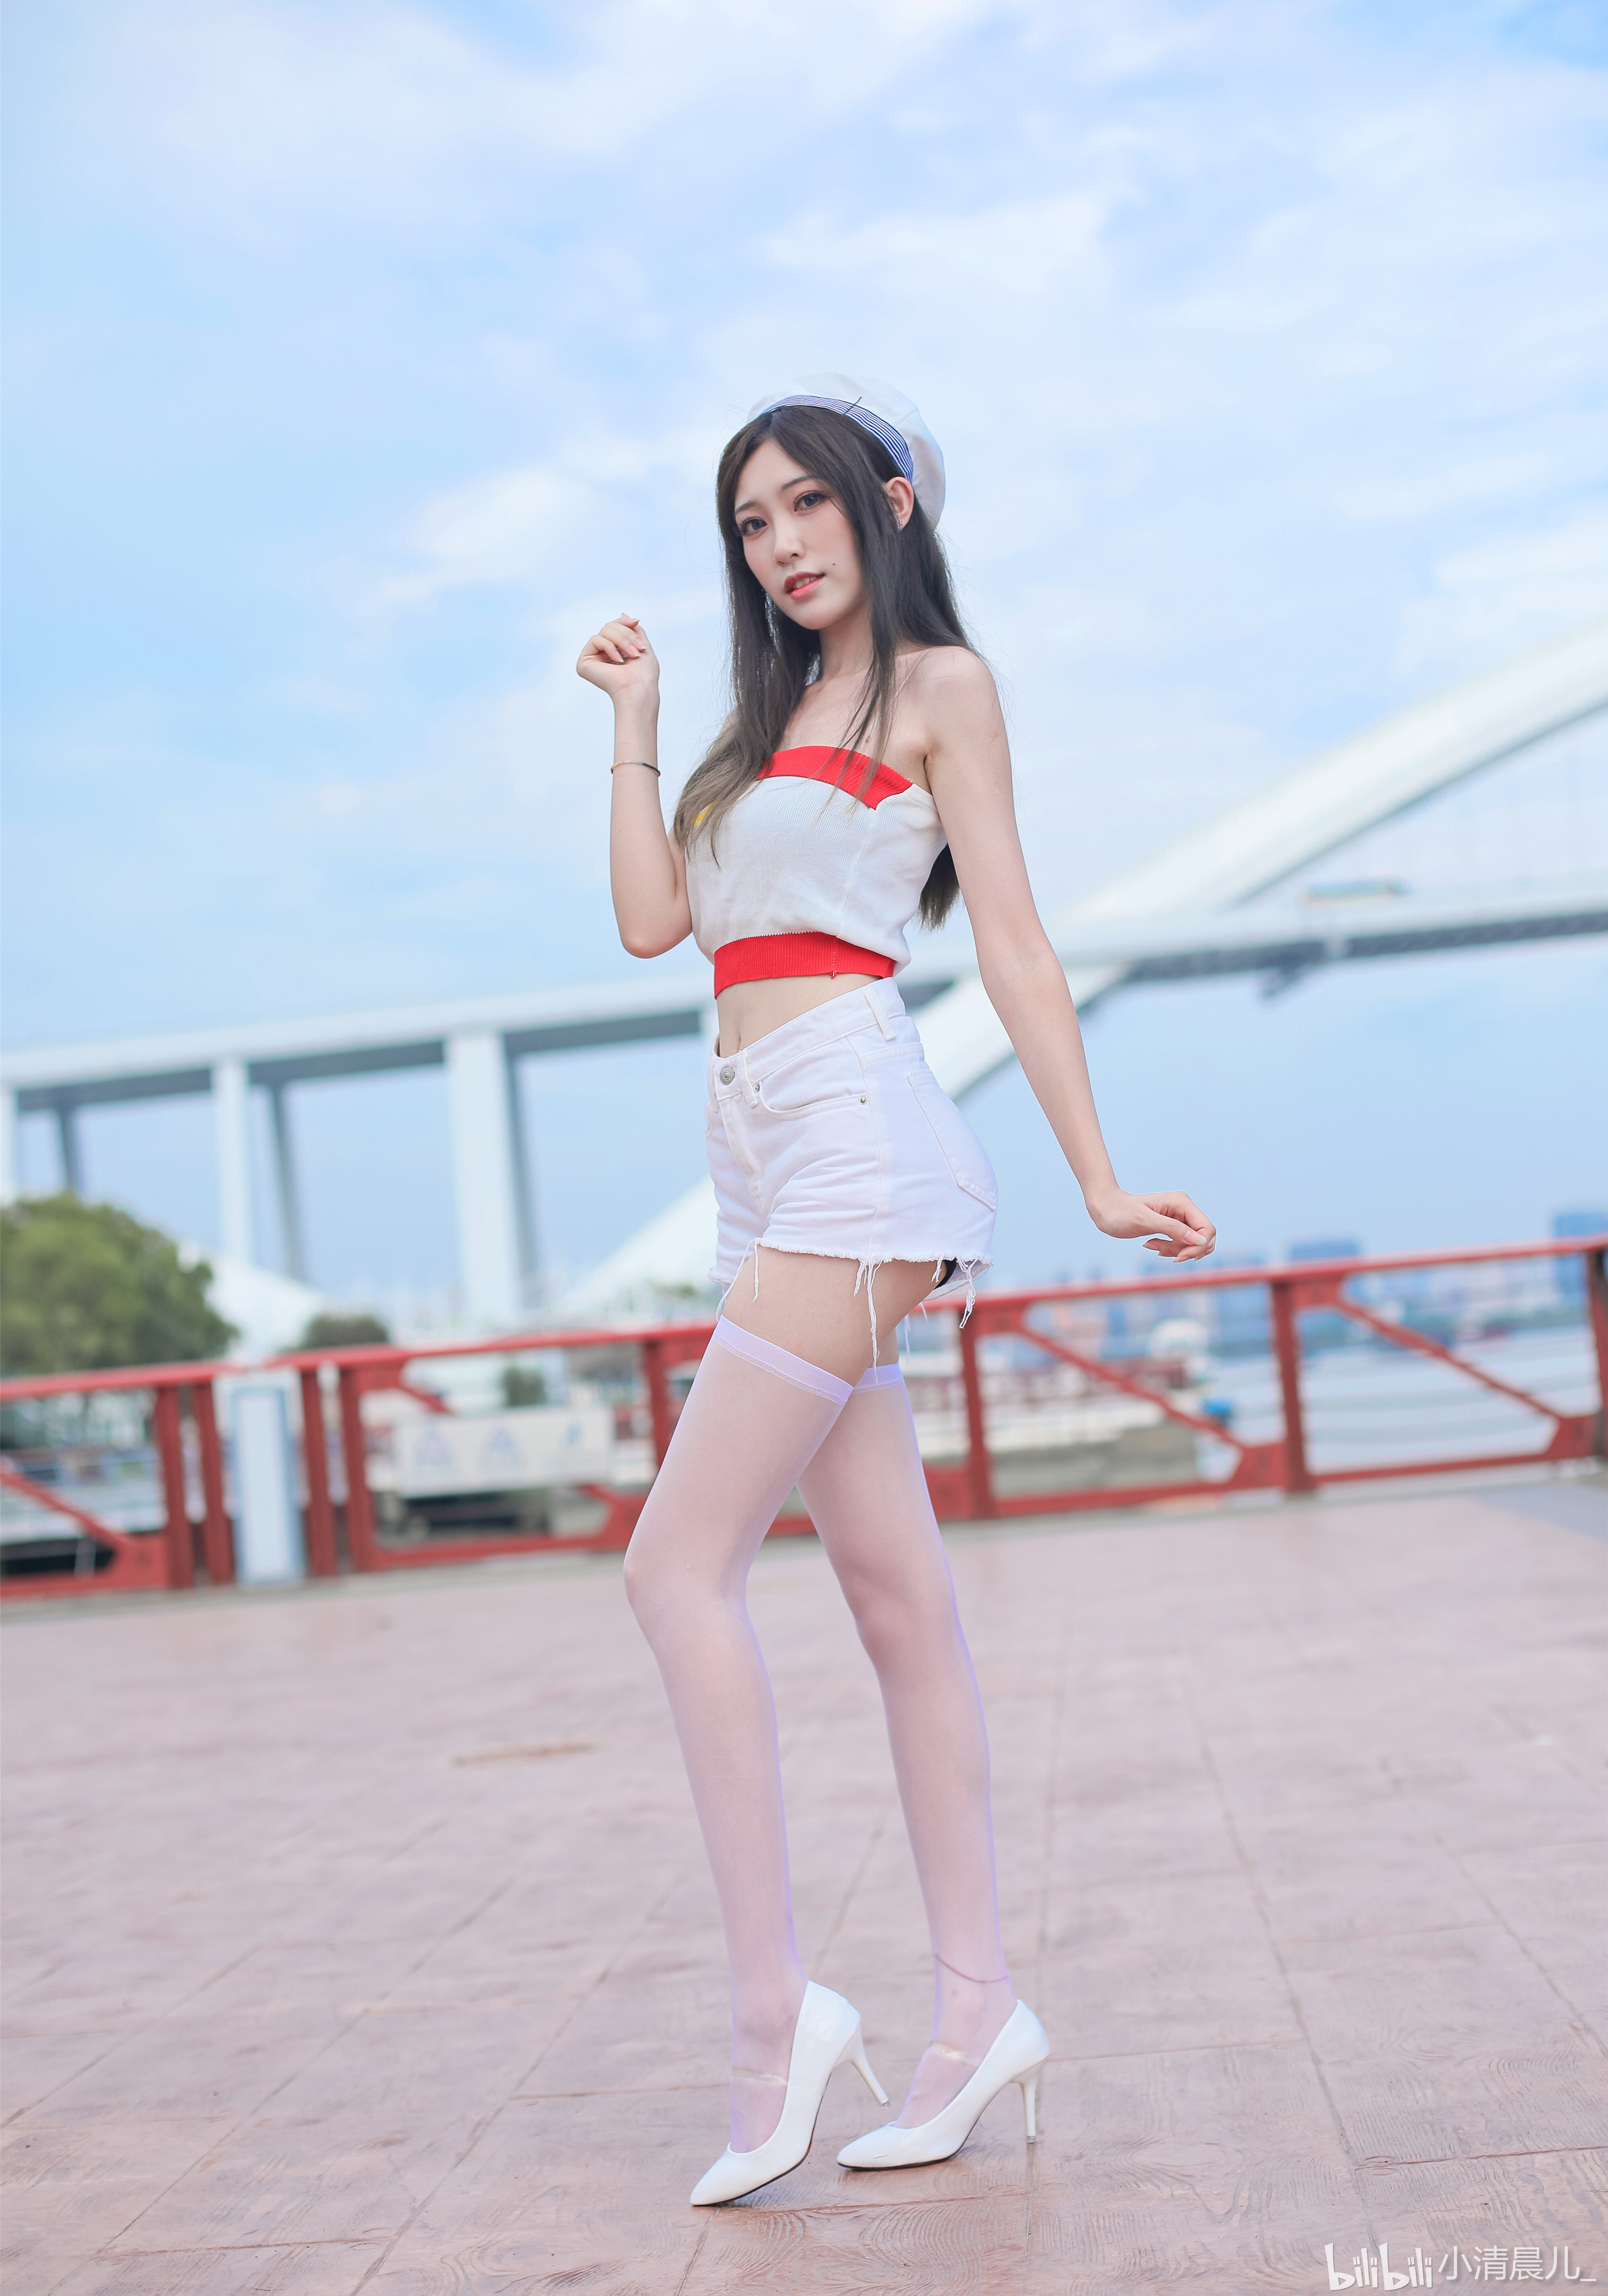 China Chinese Dancer Anchor Photoshoot Asian 3998x5710